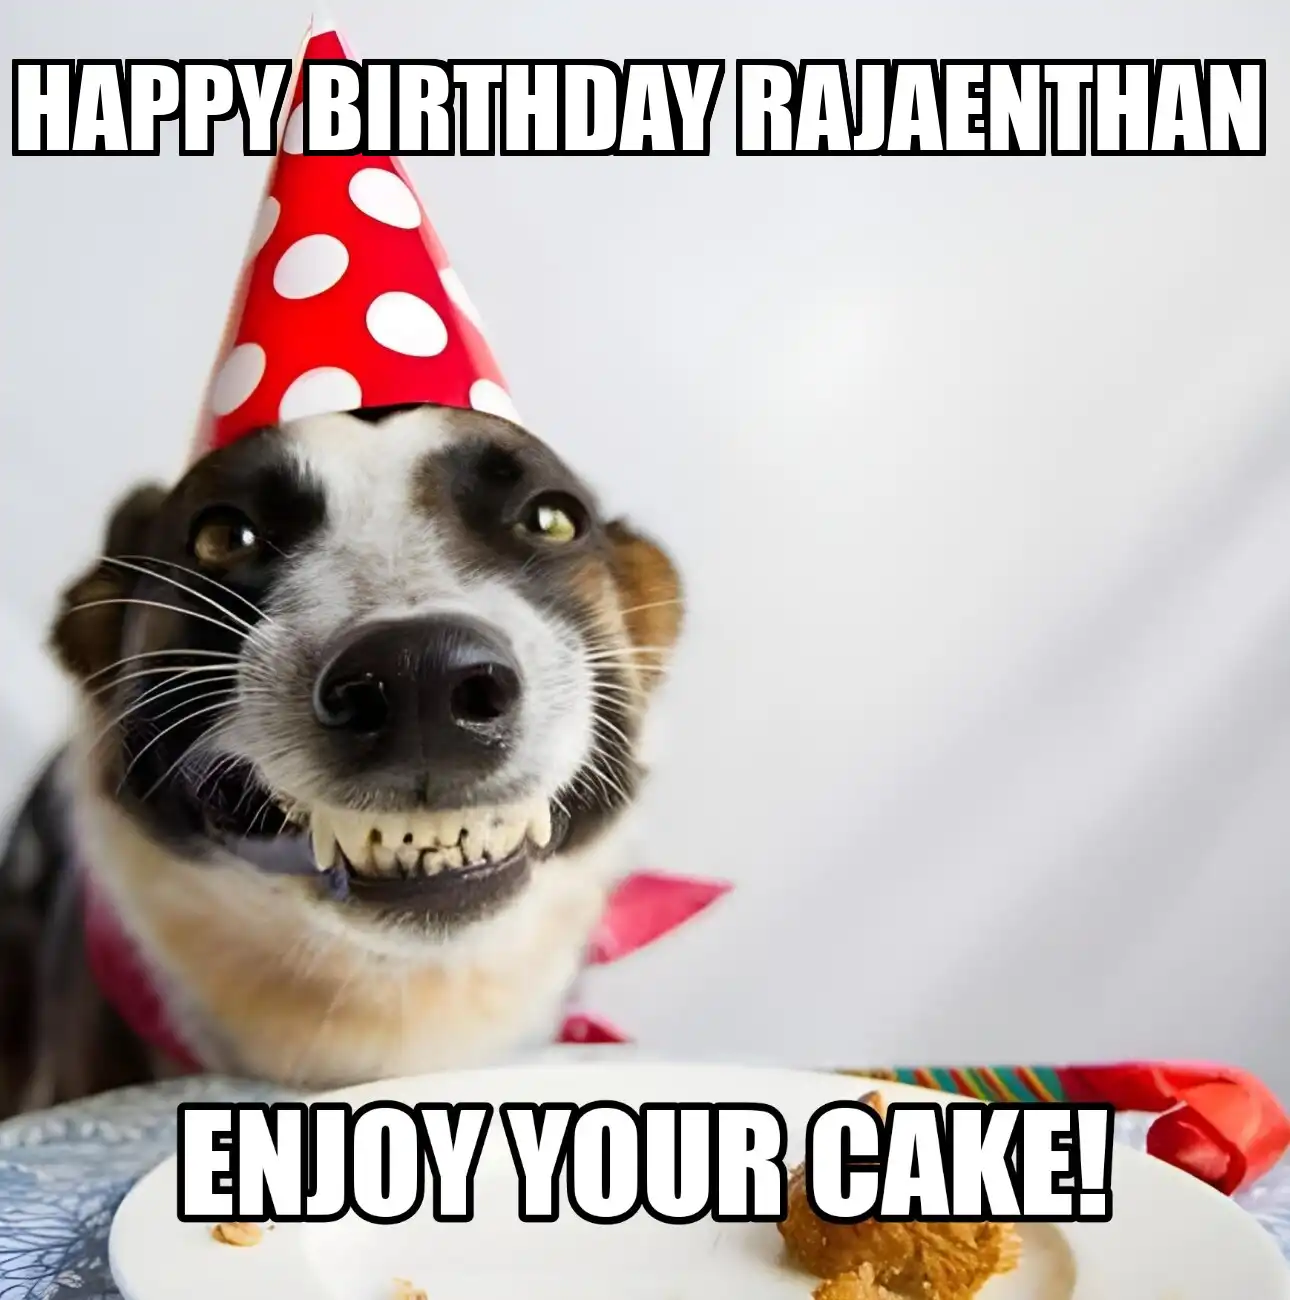 Happy Birthday Rajaenthan Enjoy Your Cake Dog Meme